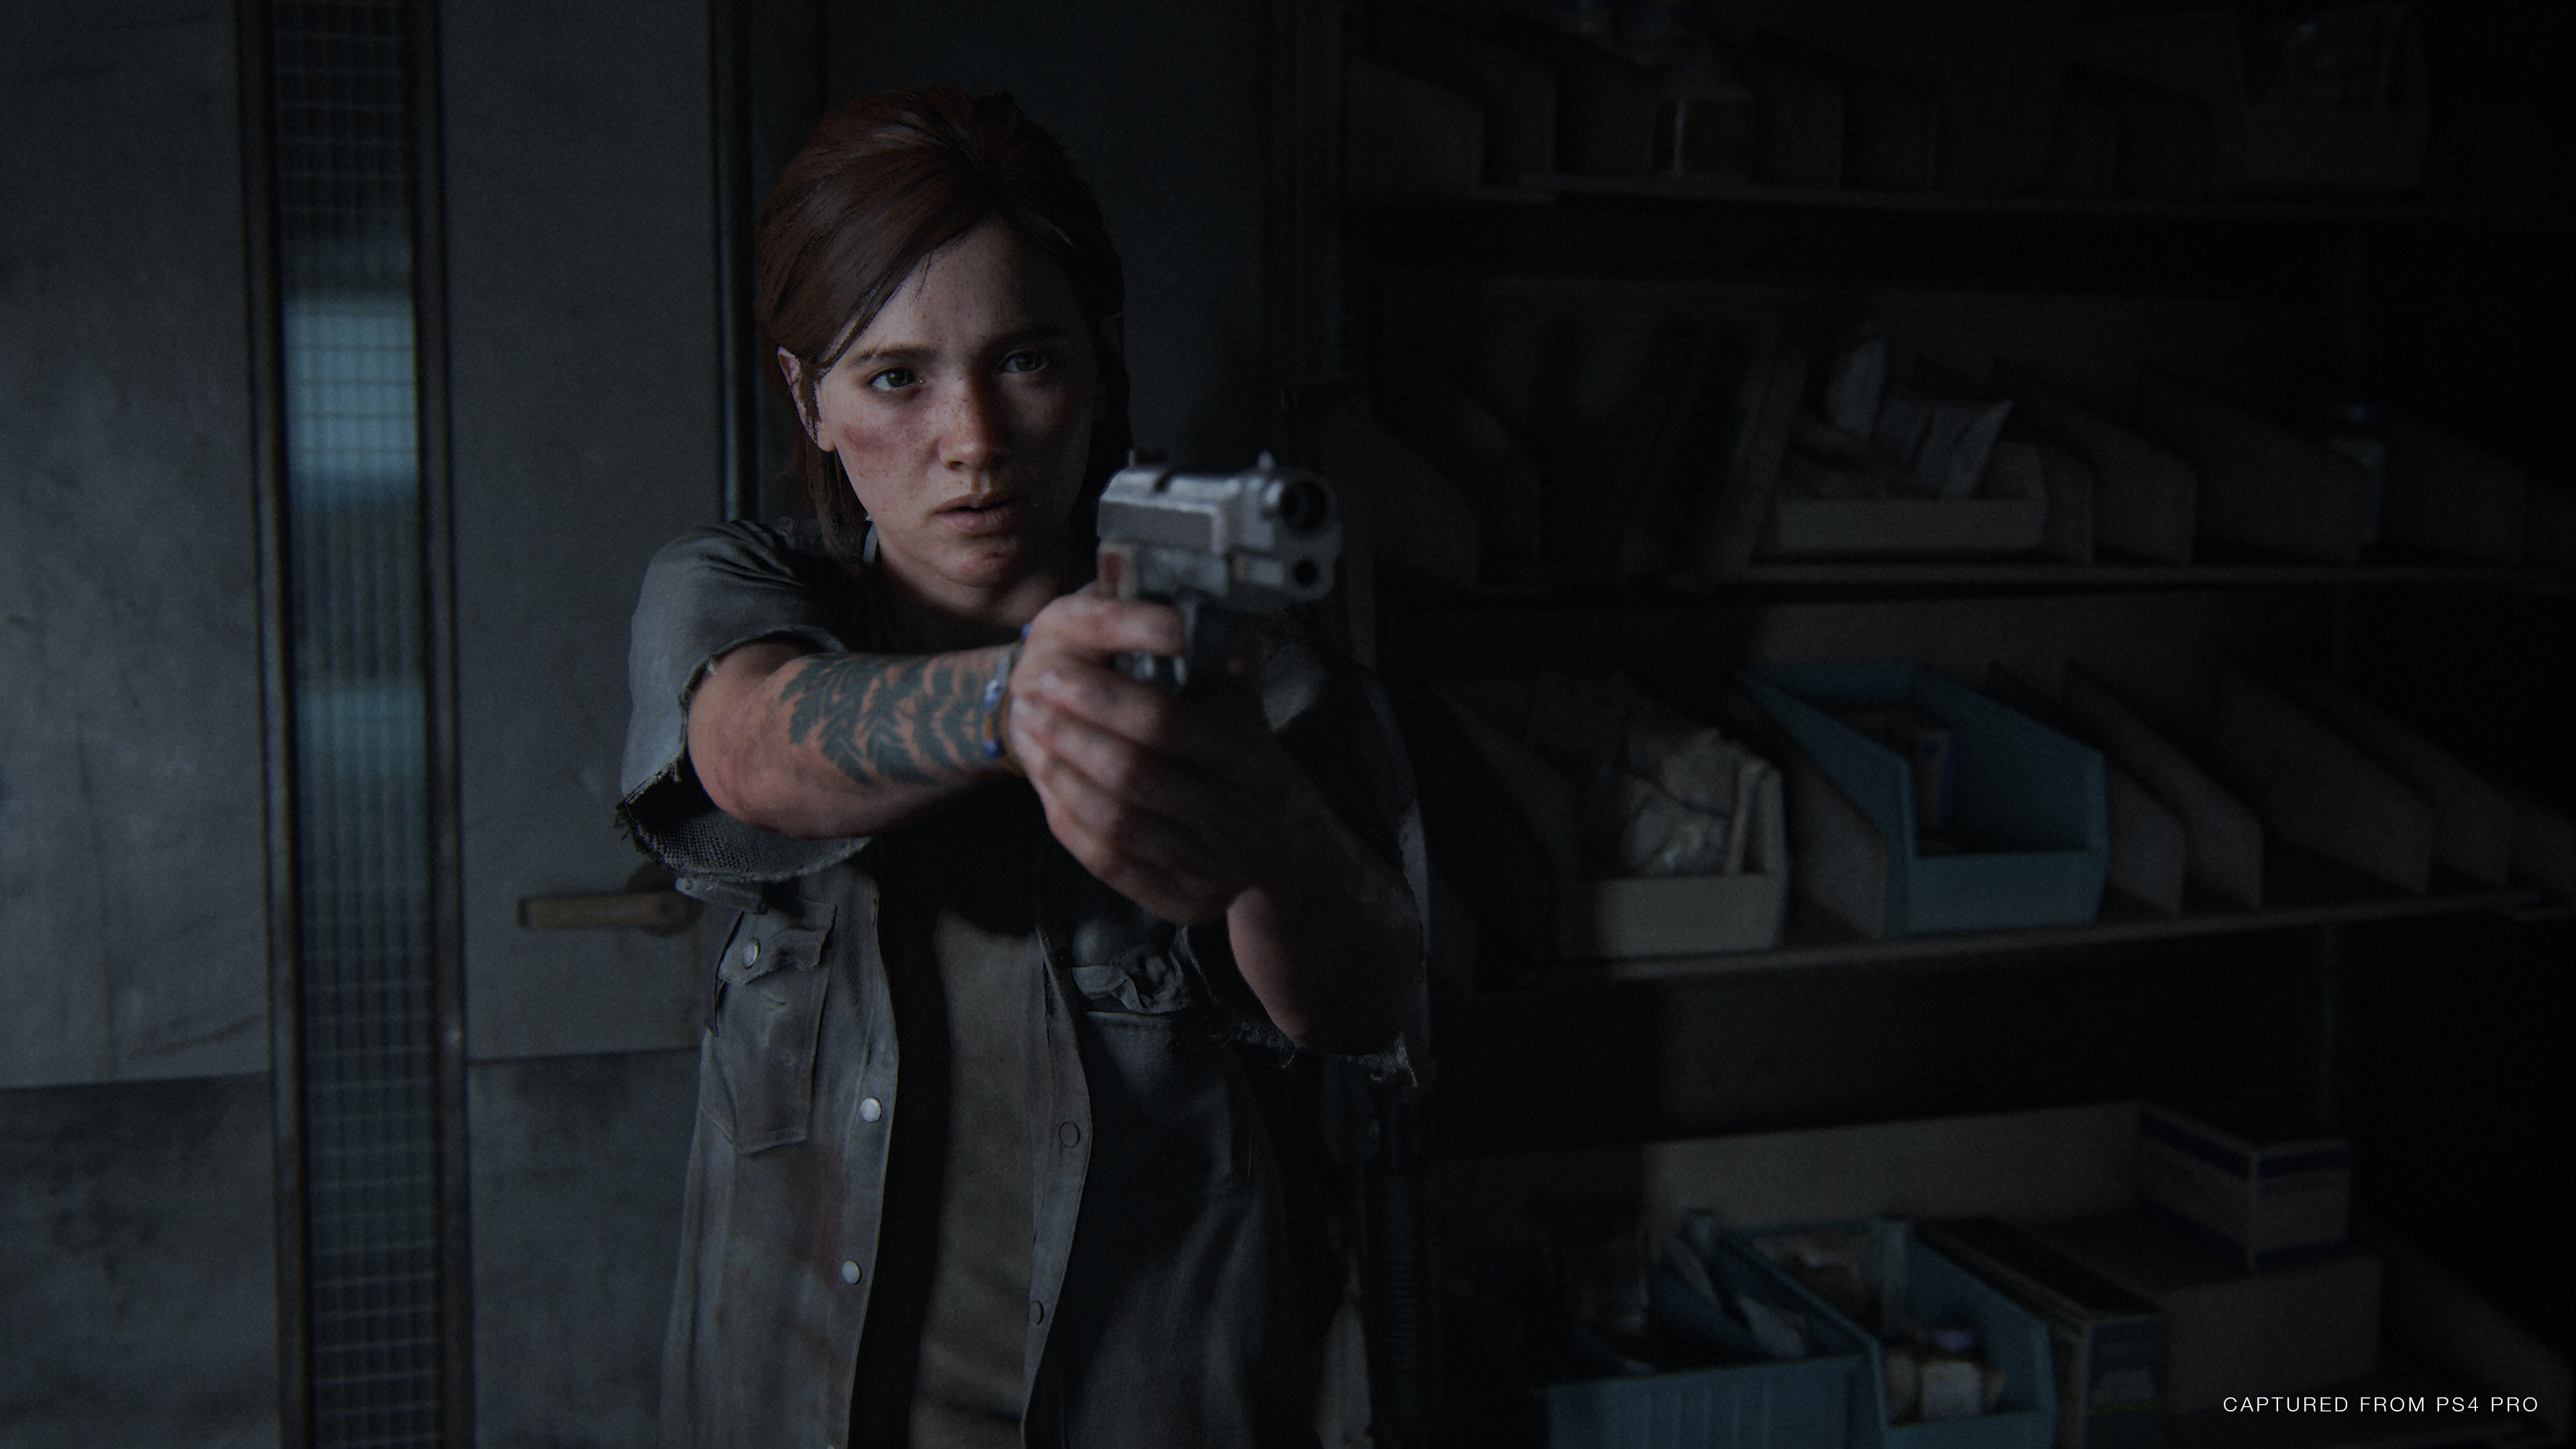 『The Last of Us Part II』先行プレビュー。リアリズムの新たな到達点、PS4円熟期を飾る大作(ネタバレなし)